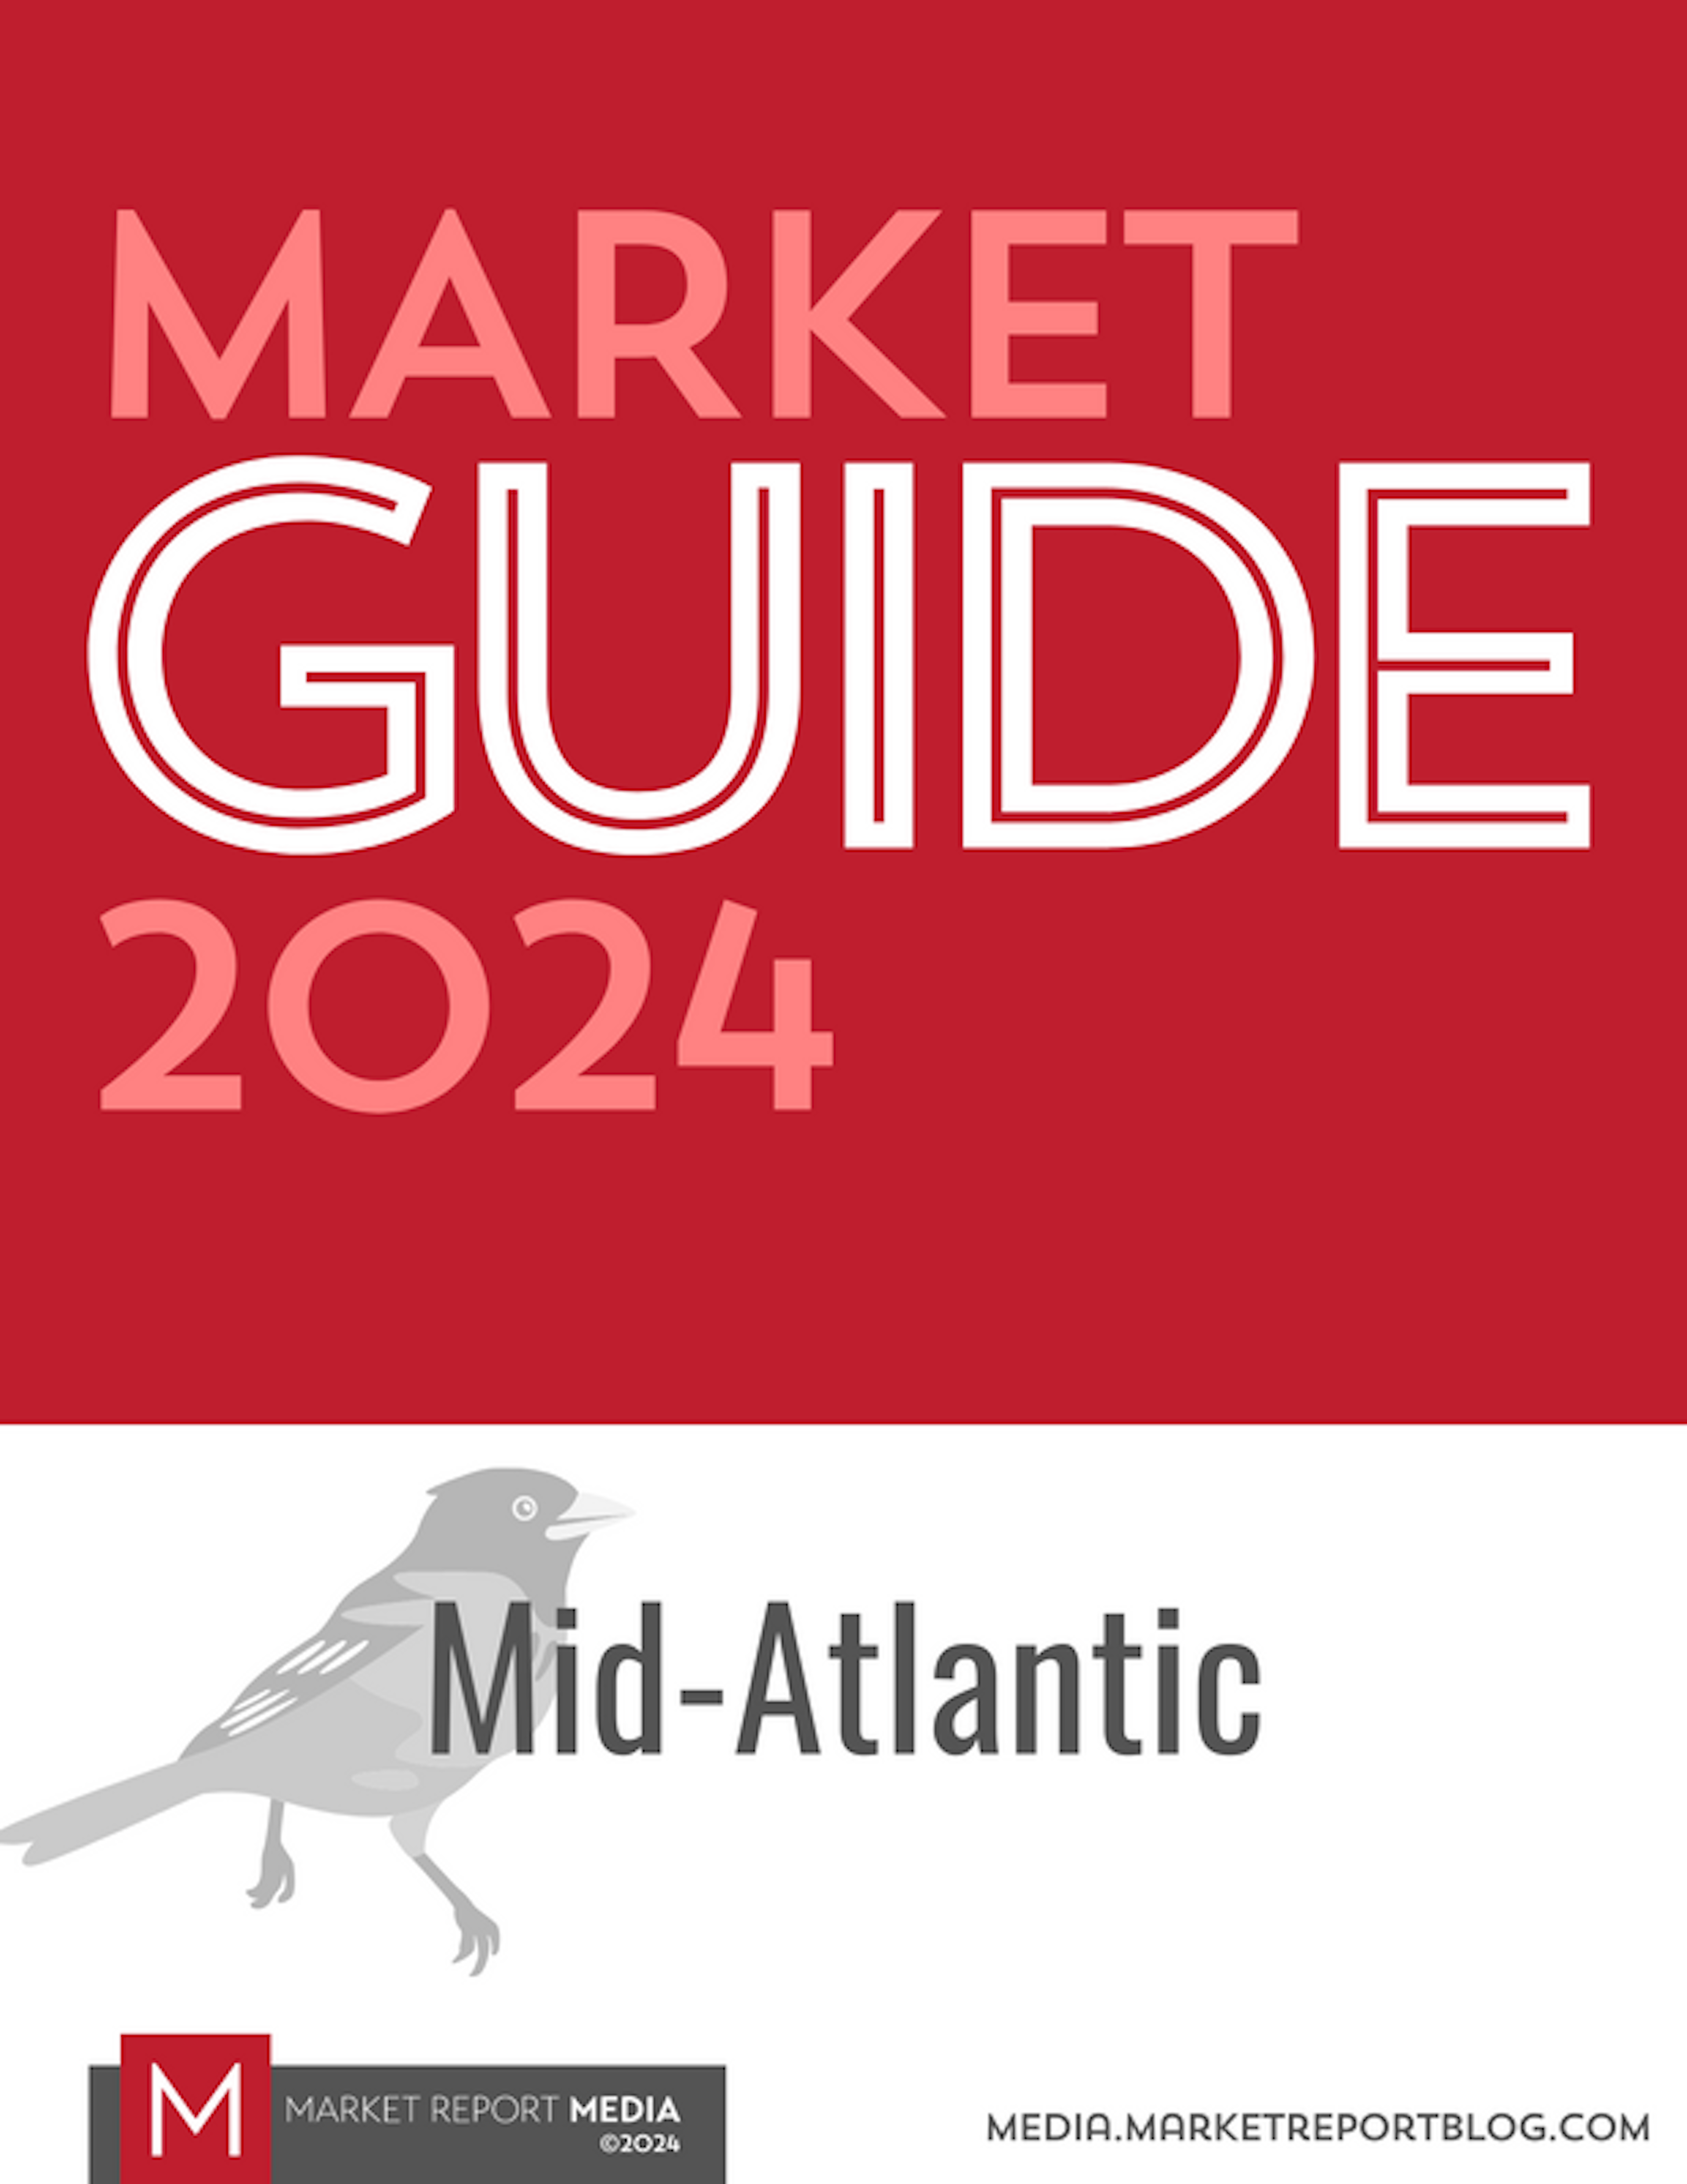 Market Guide 2024 - Mid-Atlantic